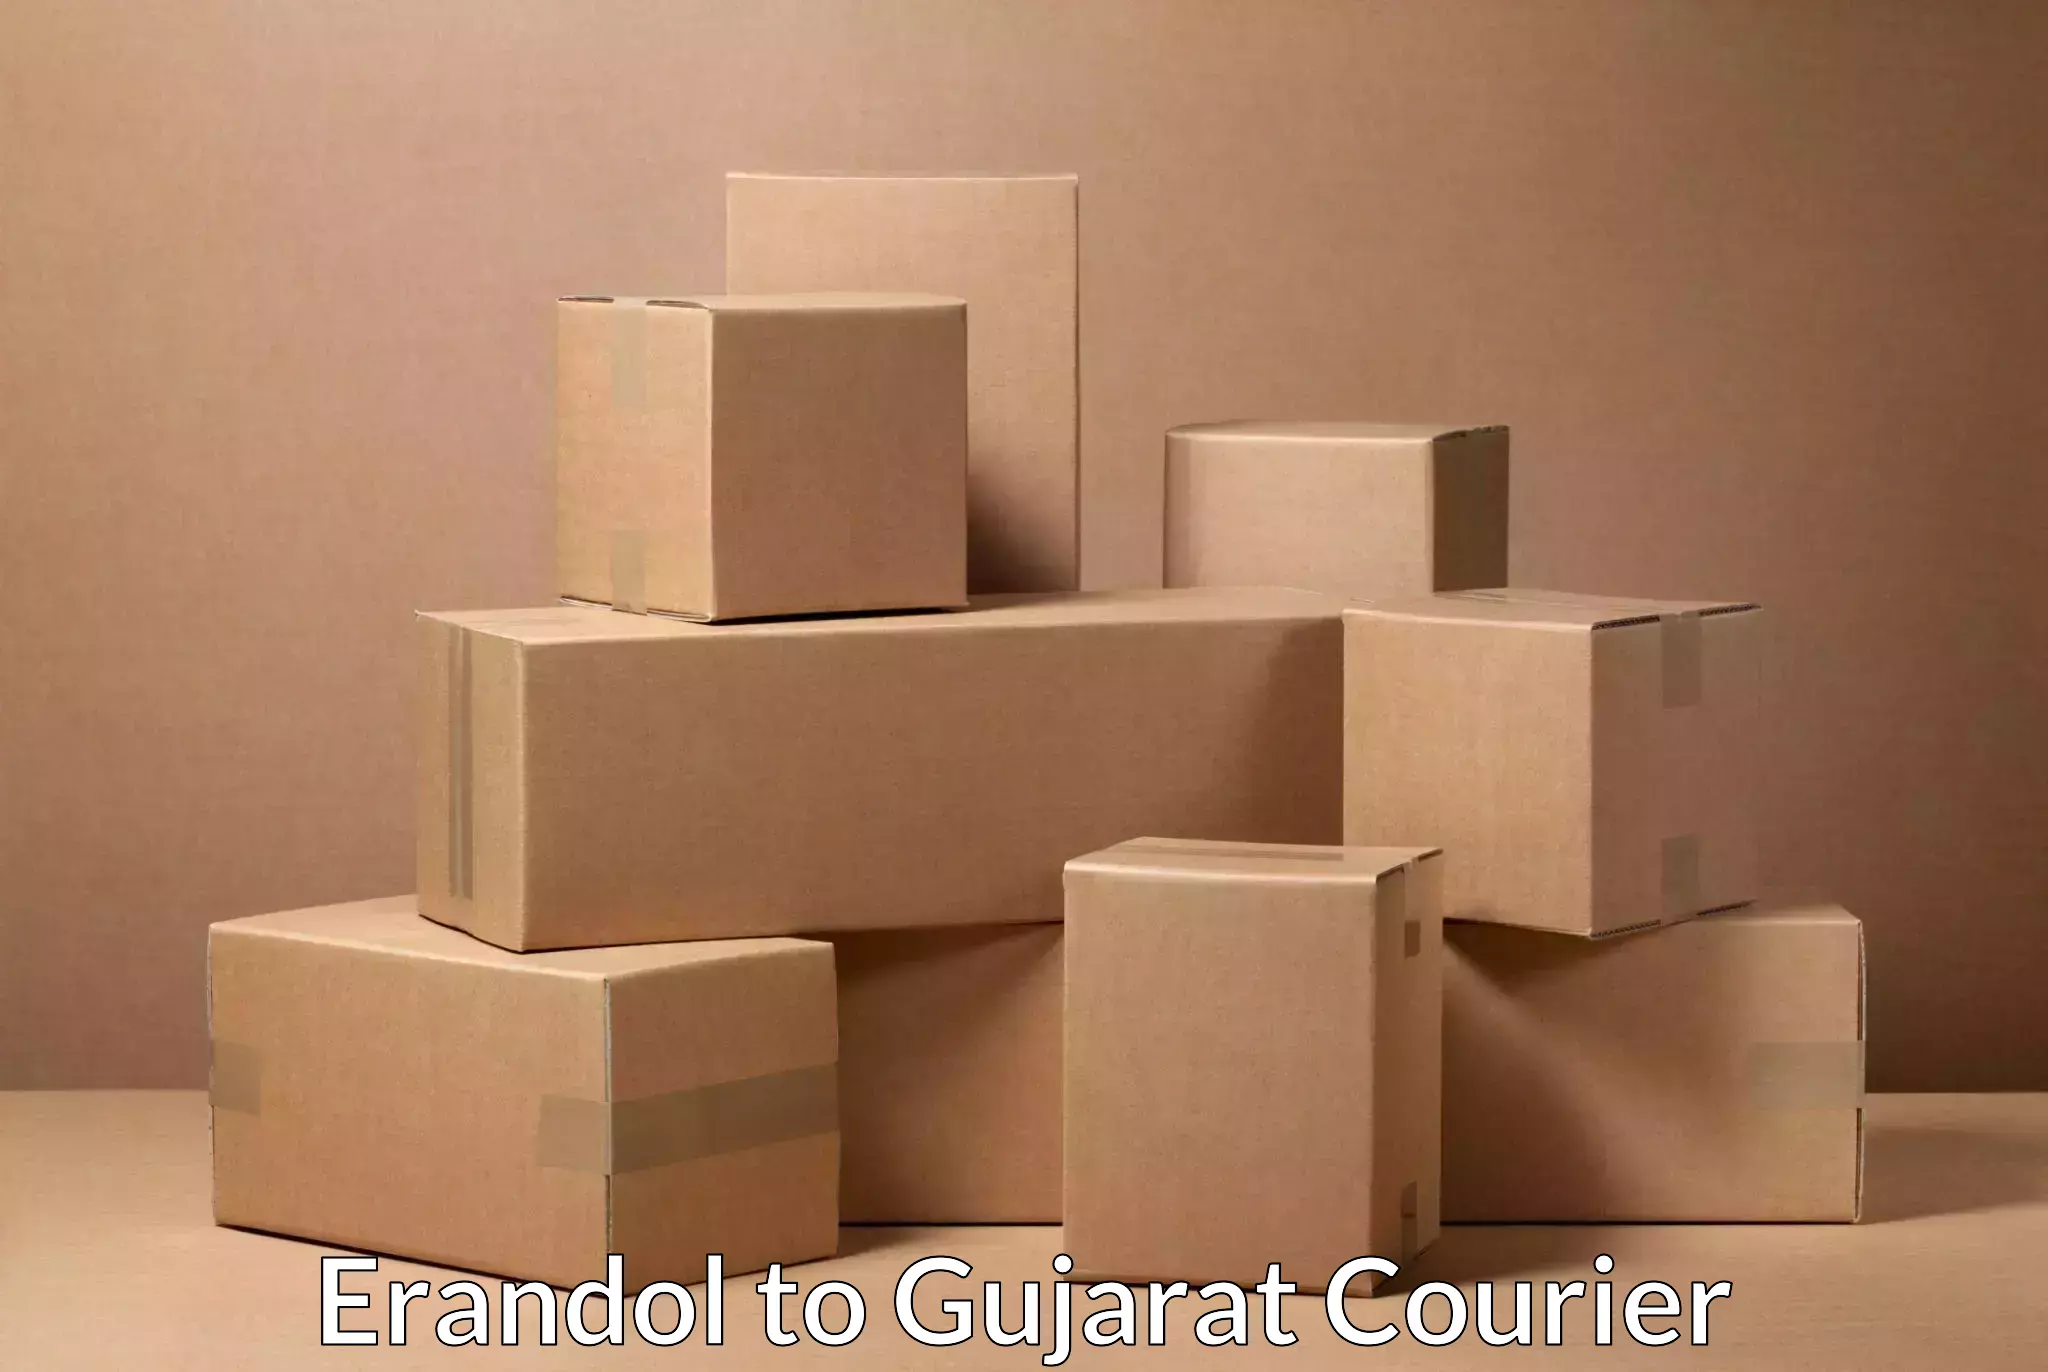 Efficient order fulfillment Erandol to Gujarat